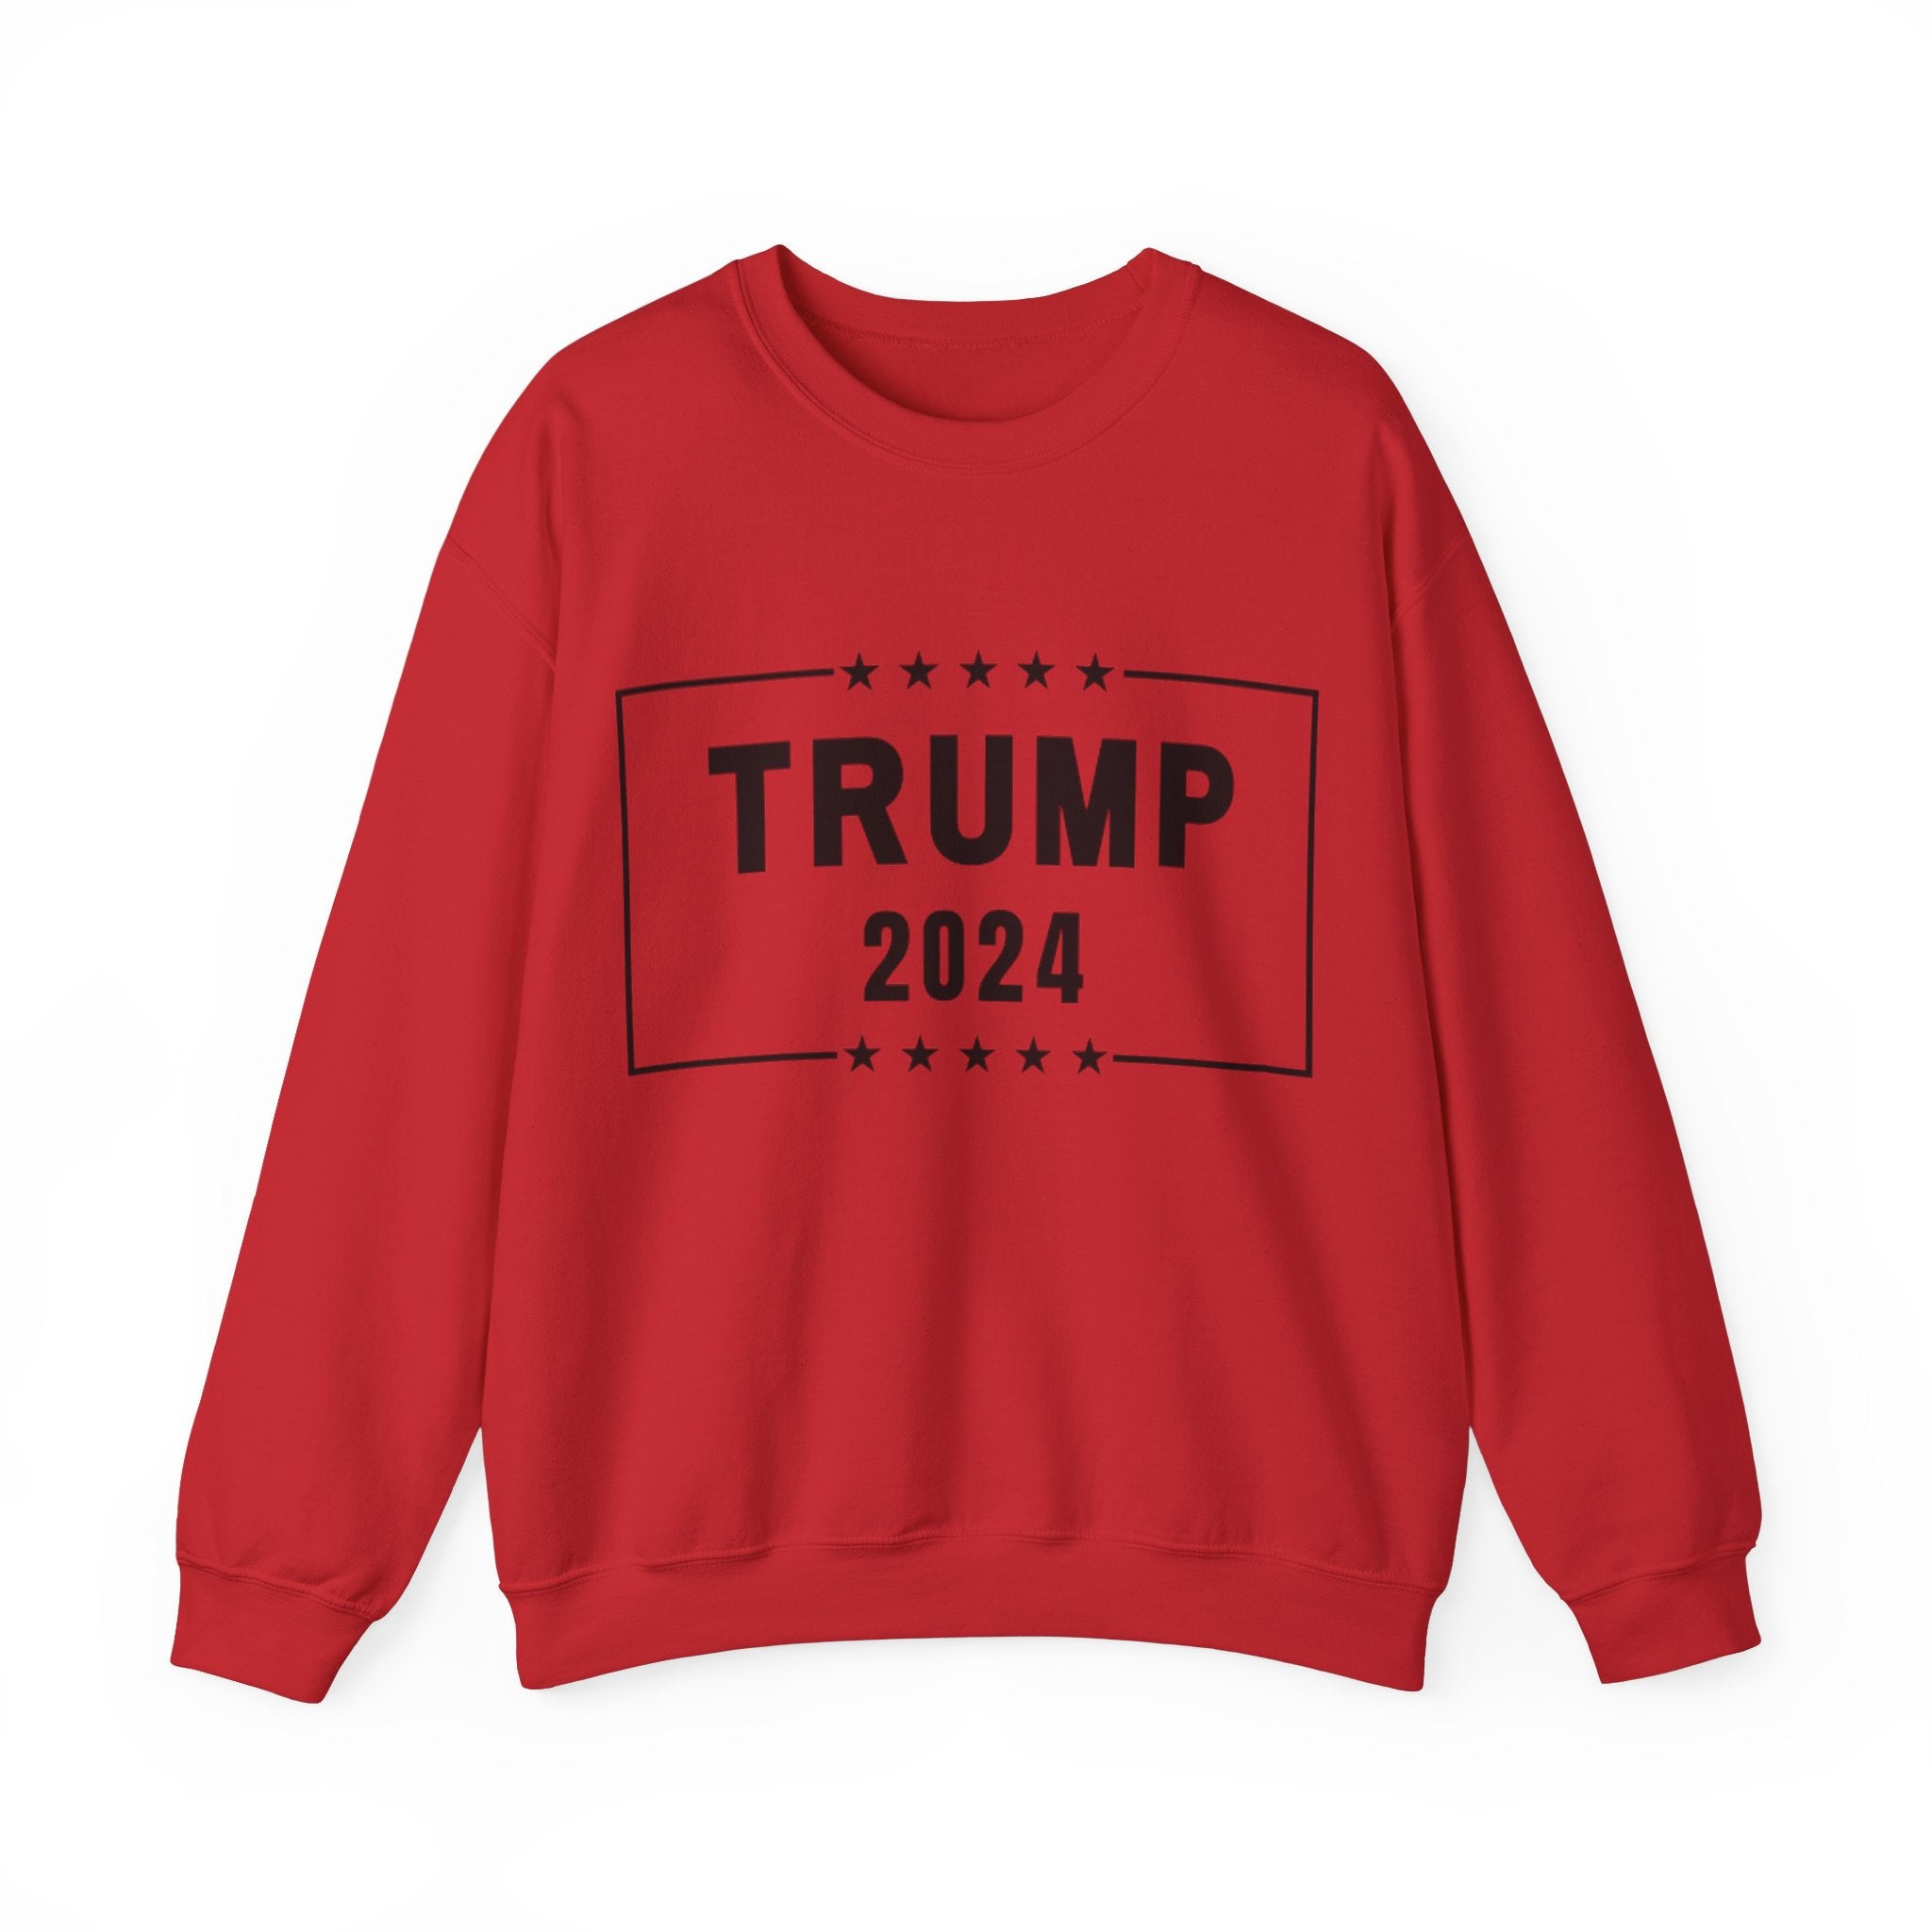 Donald Trump 2024 Crewneck Sweatshirt